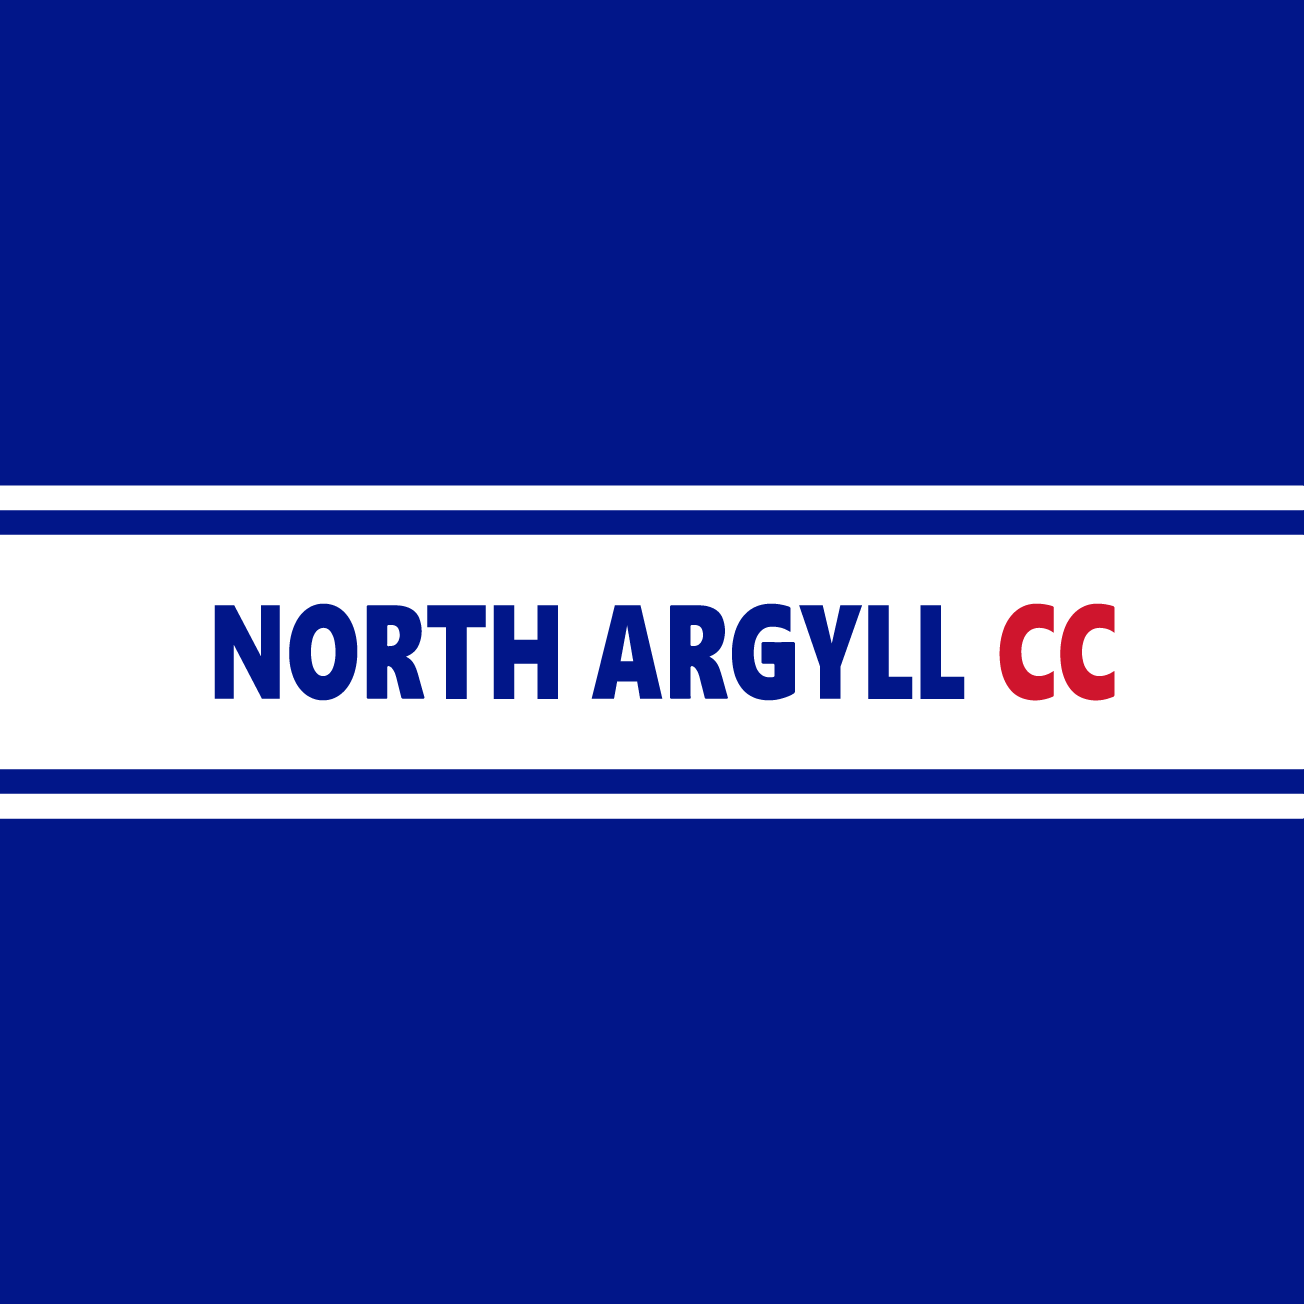 Club Image for NORTH ARGYLL CC